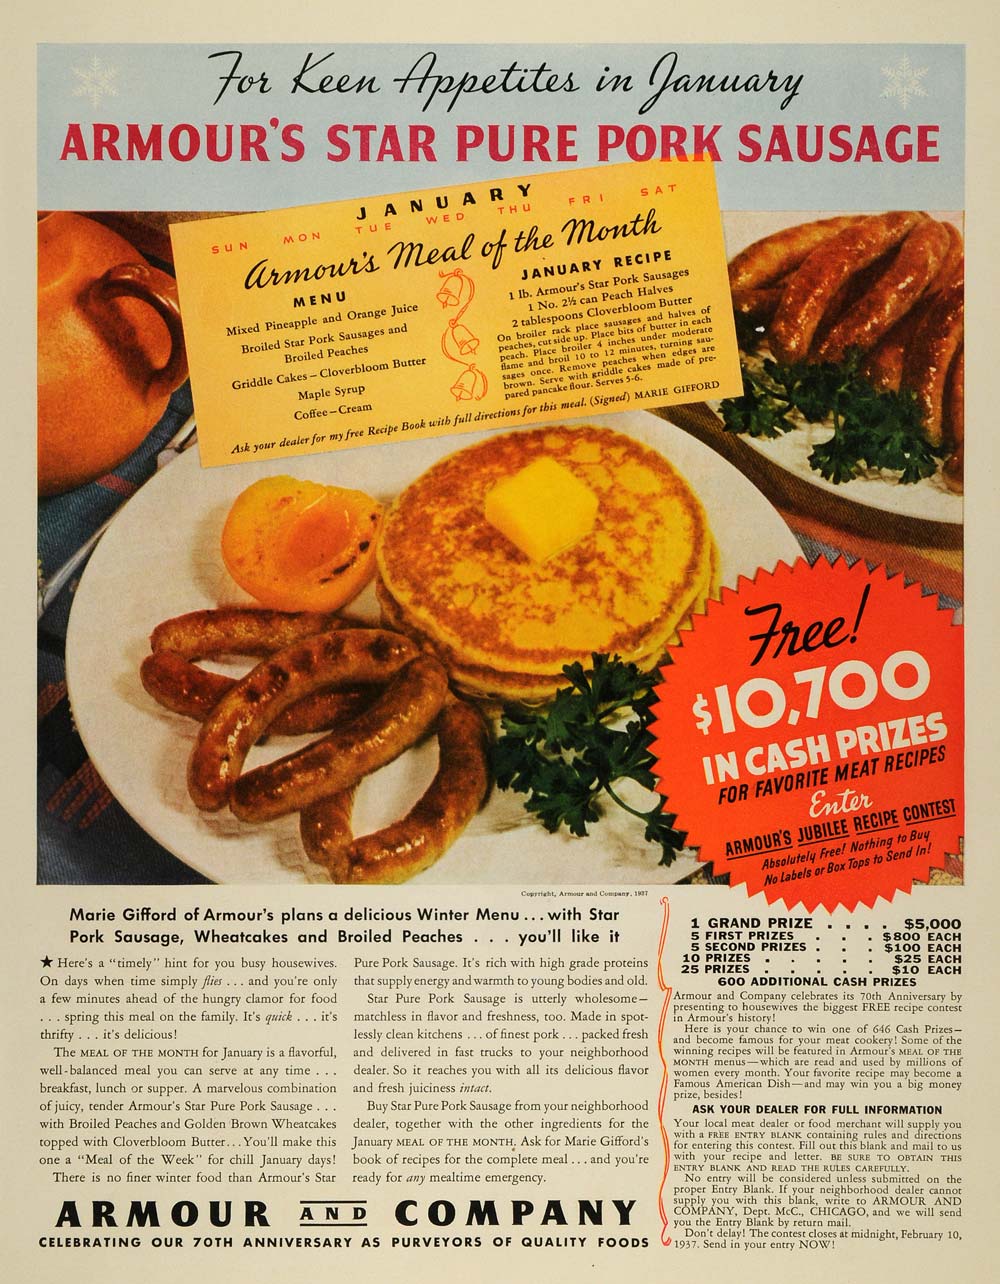 1937 Ad Armour Star Pure Pork Sausage Links Breakfast - ORIGINAL